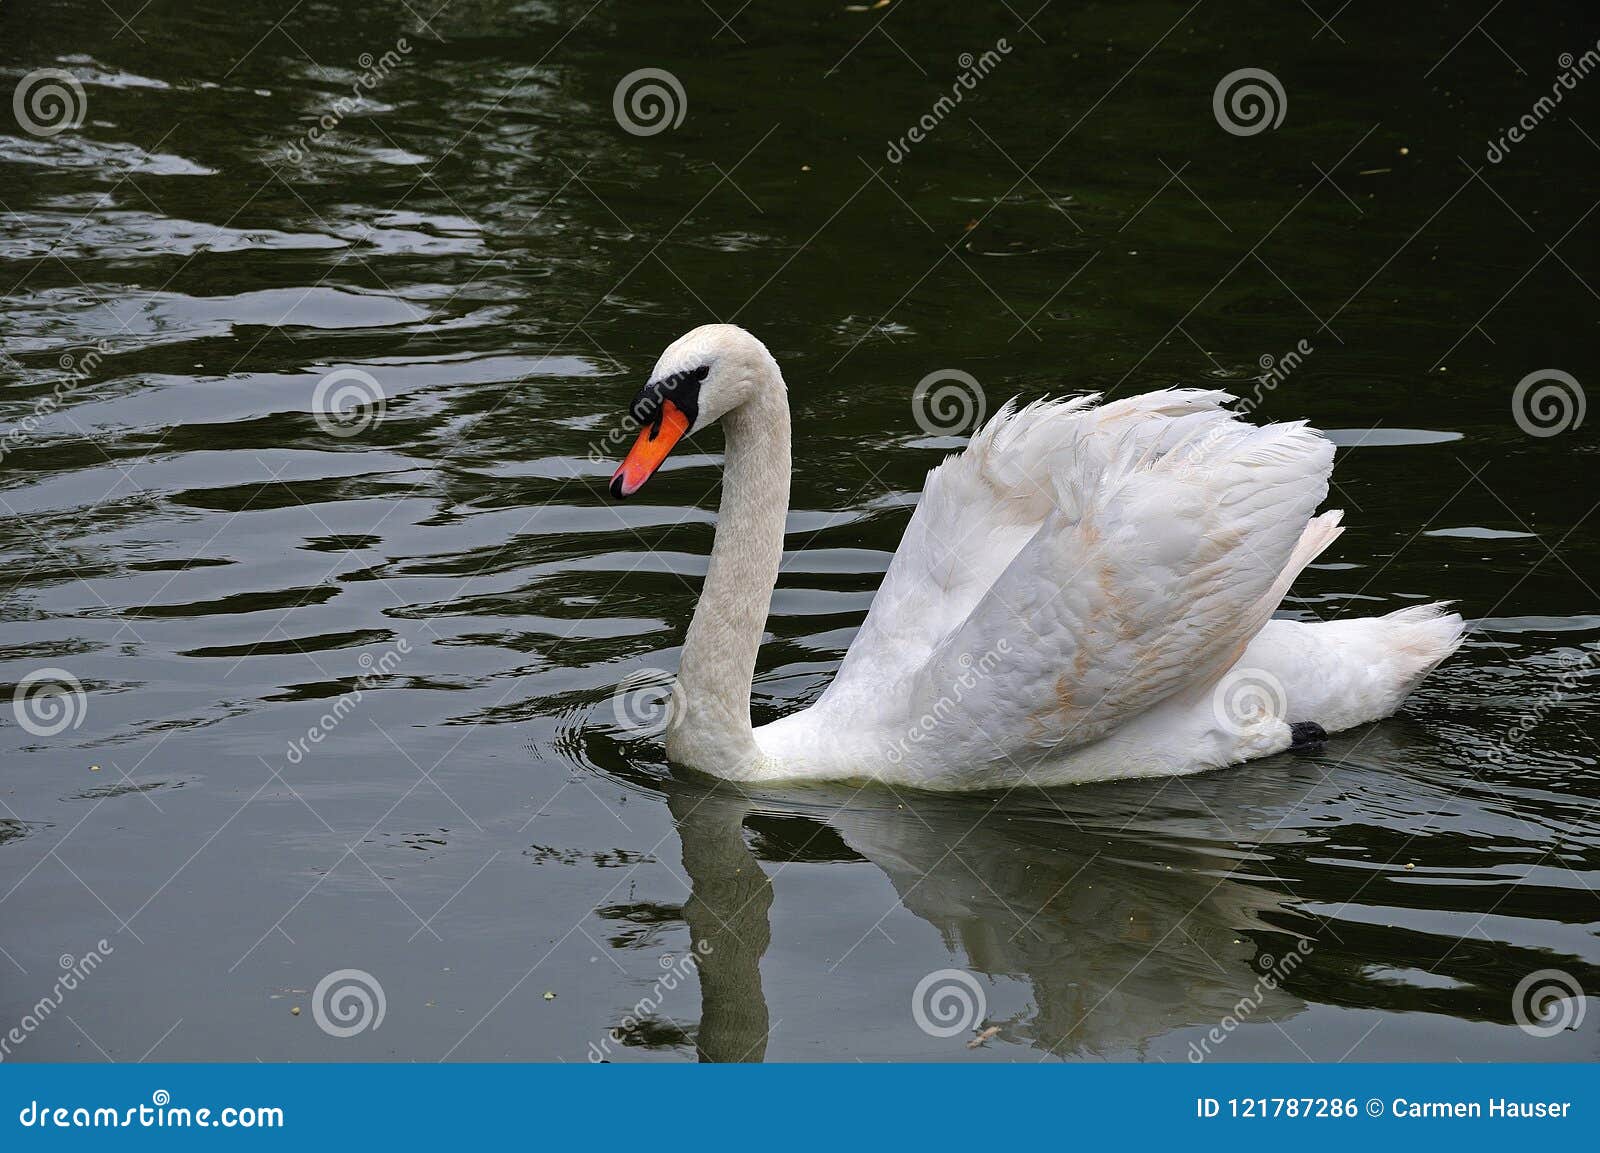 White swan on black water stock photo. Image of 121787286